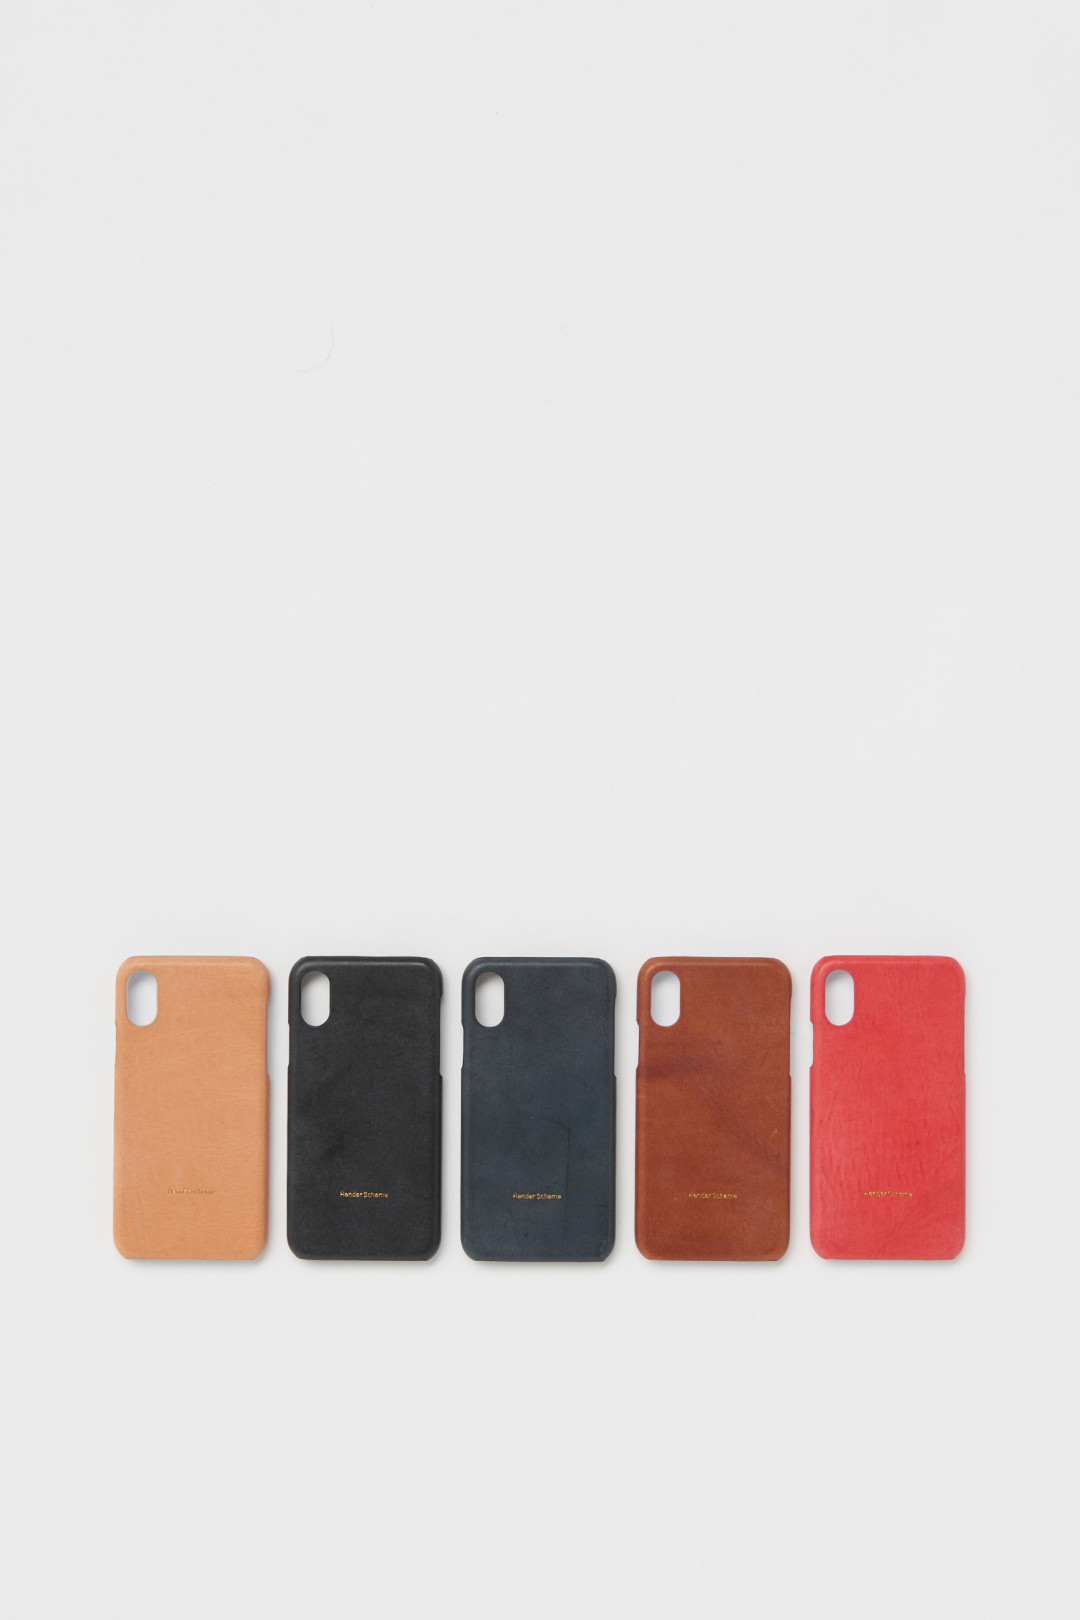 「iphone case X」（1万2,000円）